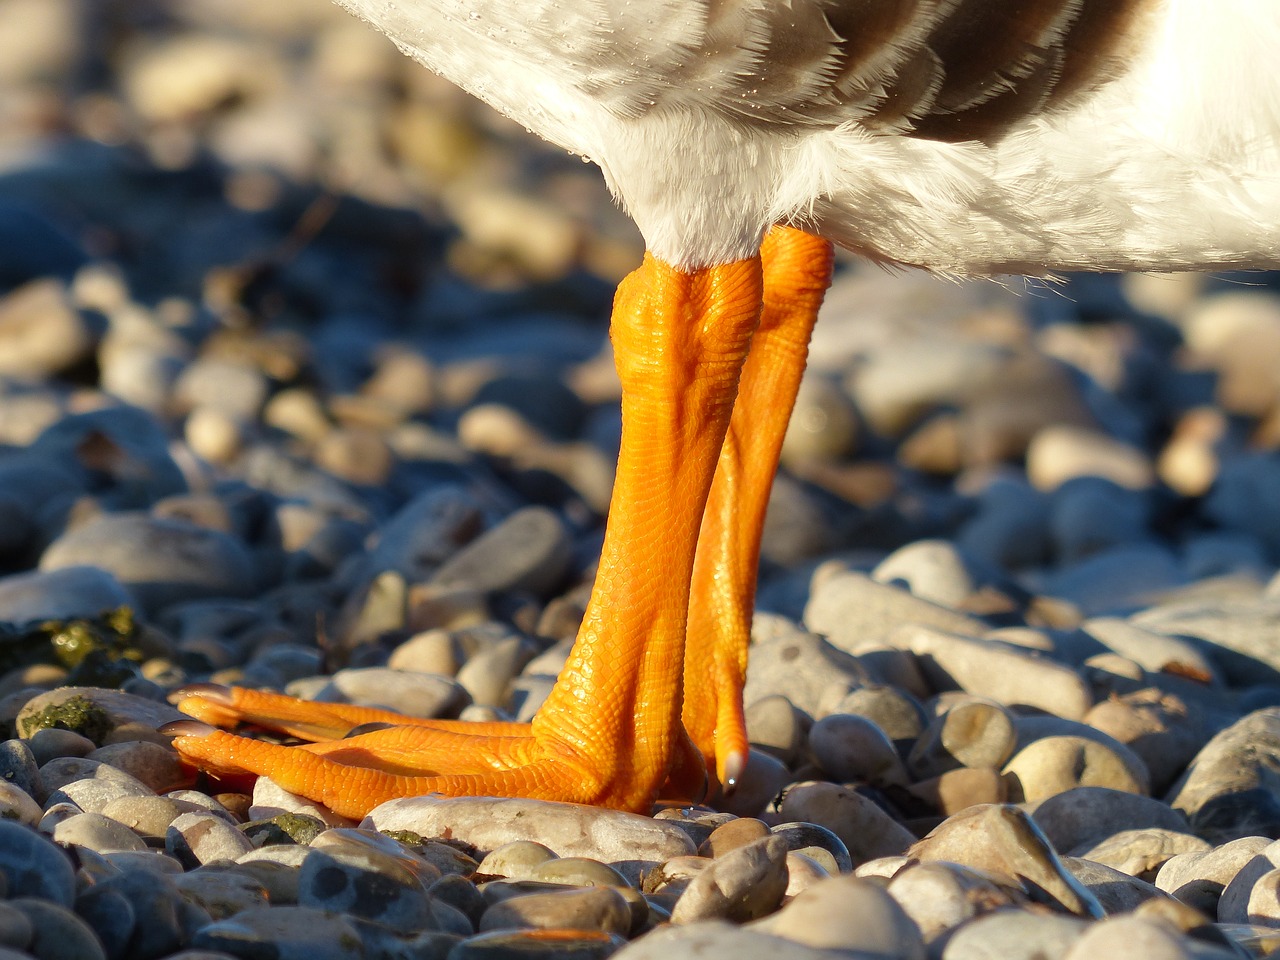 Download free photo of Duck,duck feet,feet,orange,stones - from needpix.com